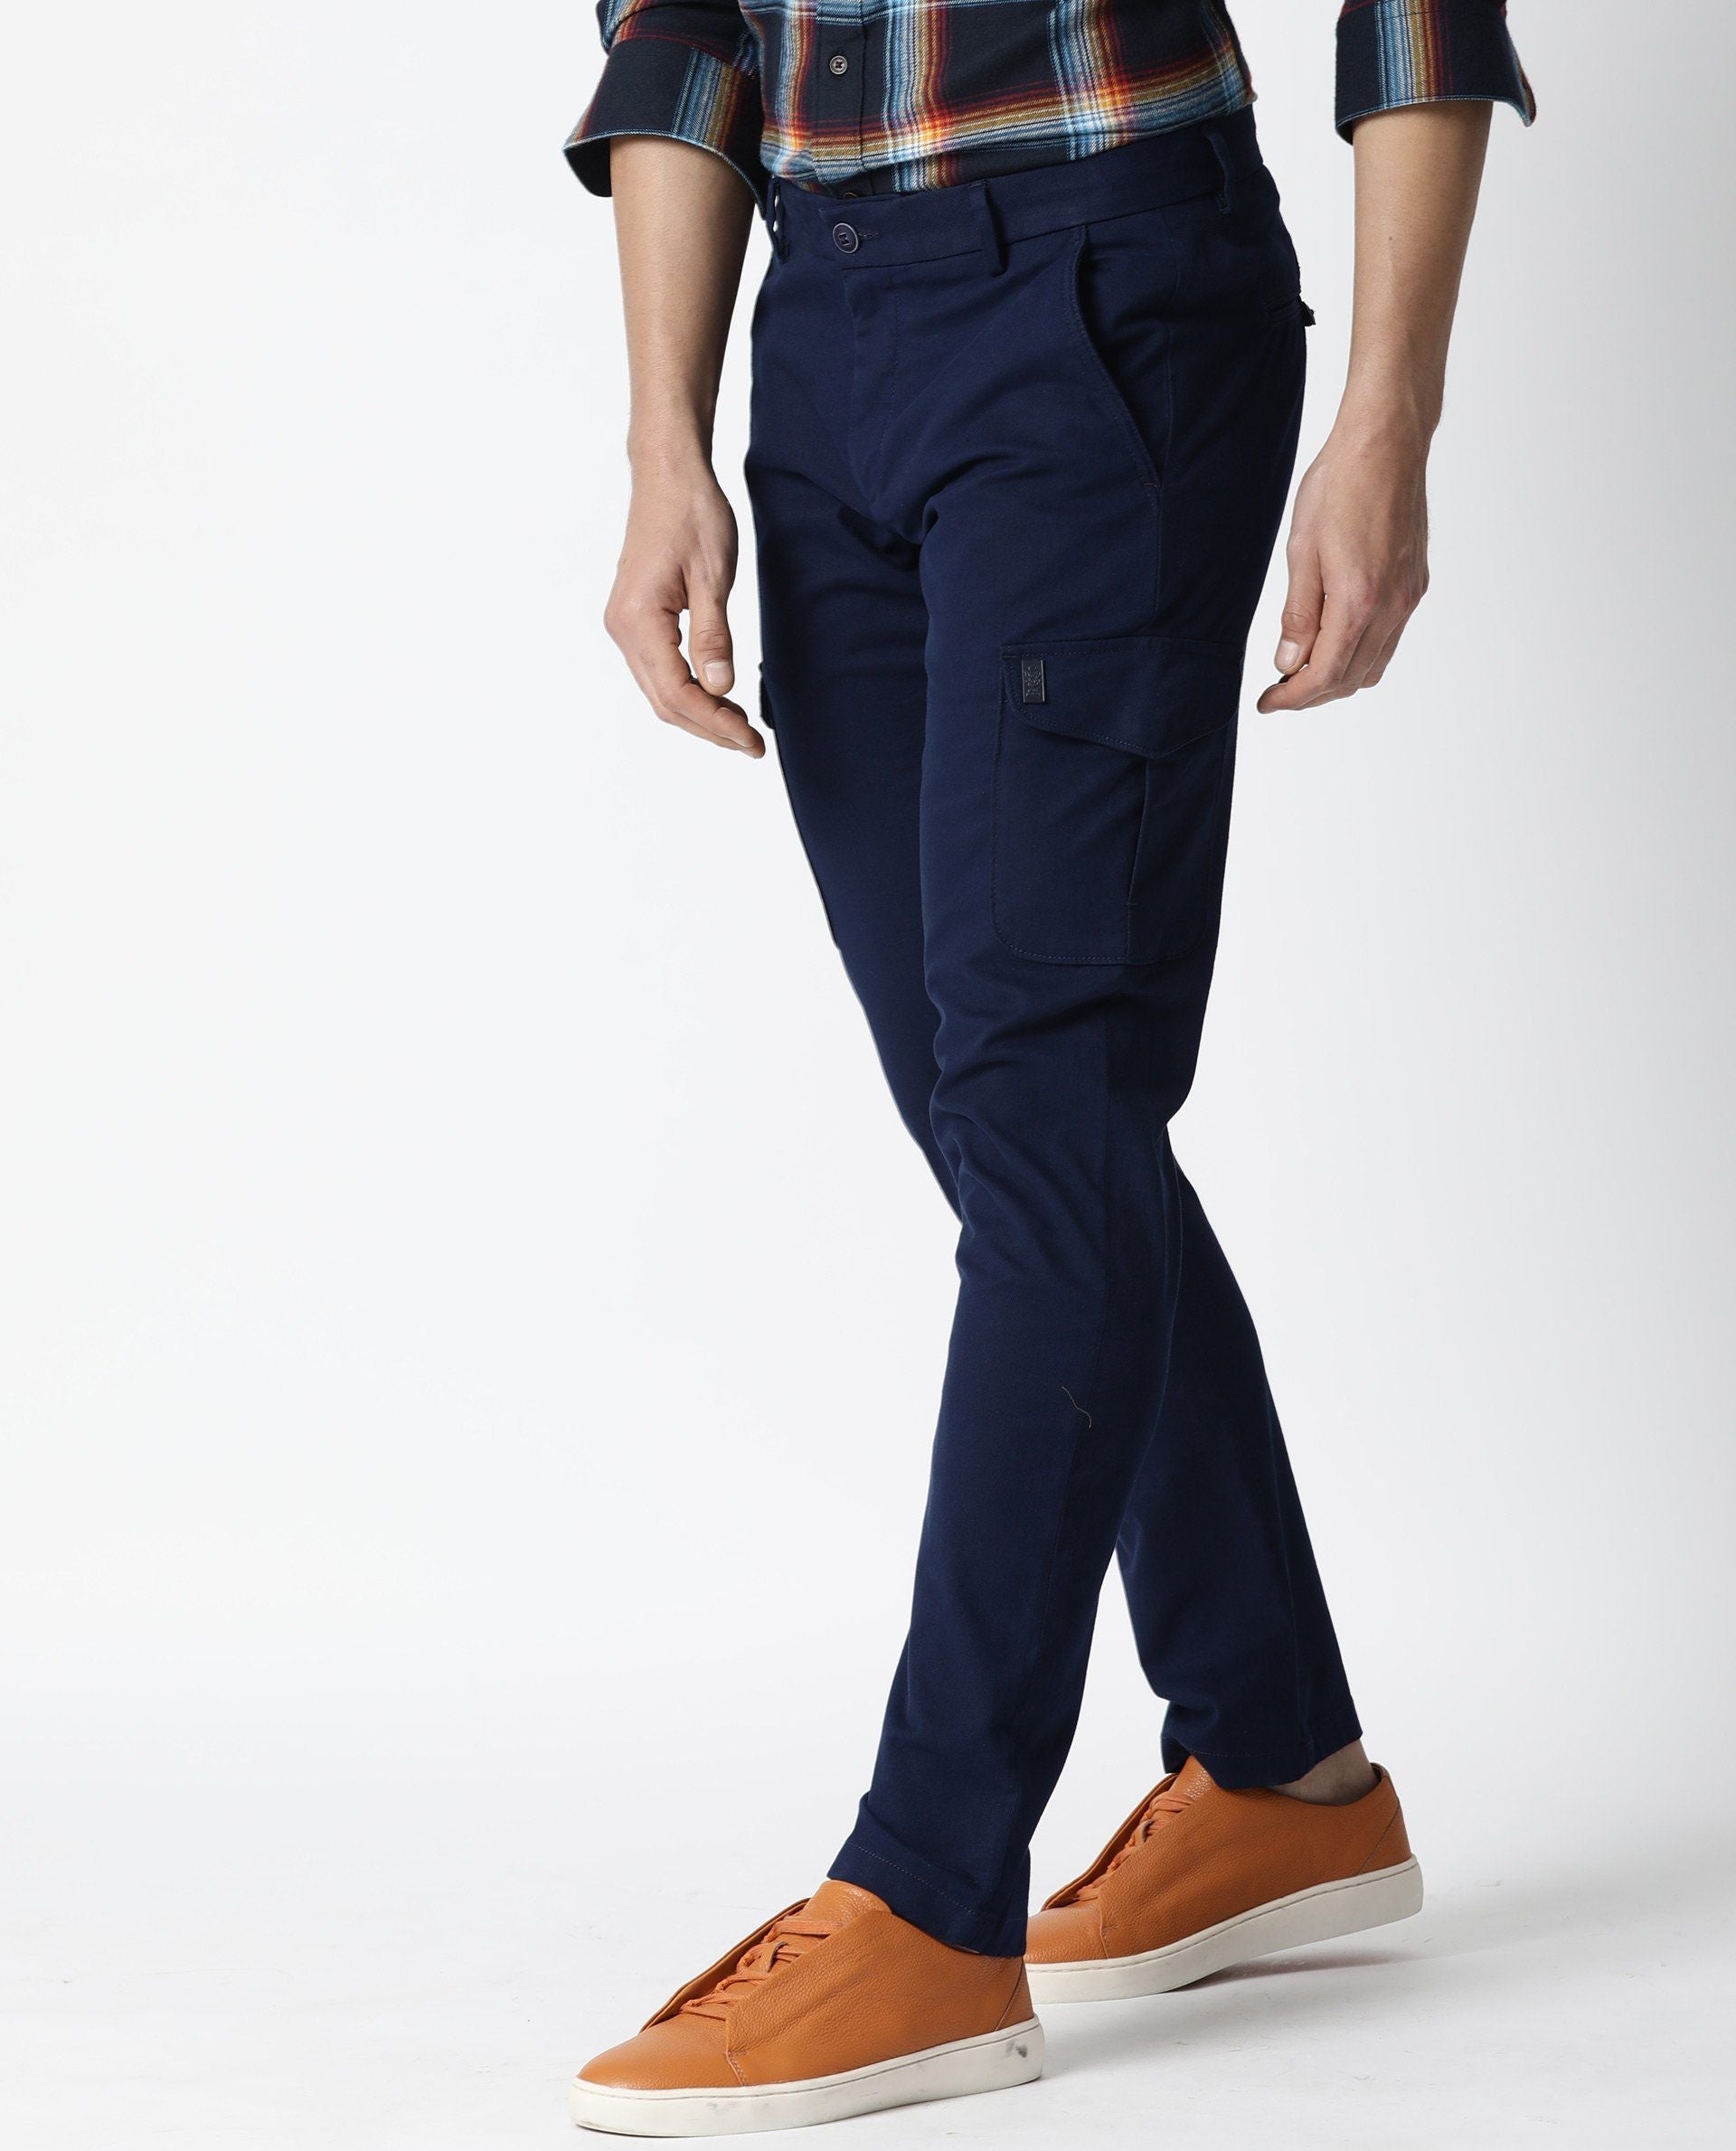 Ribbons Joggers Men Multi-pocket Streetwear Mens Harem Pants Casual Slim  Fit Cargo Pants Ankle-length Trousers Men - AliExpress